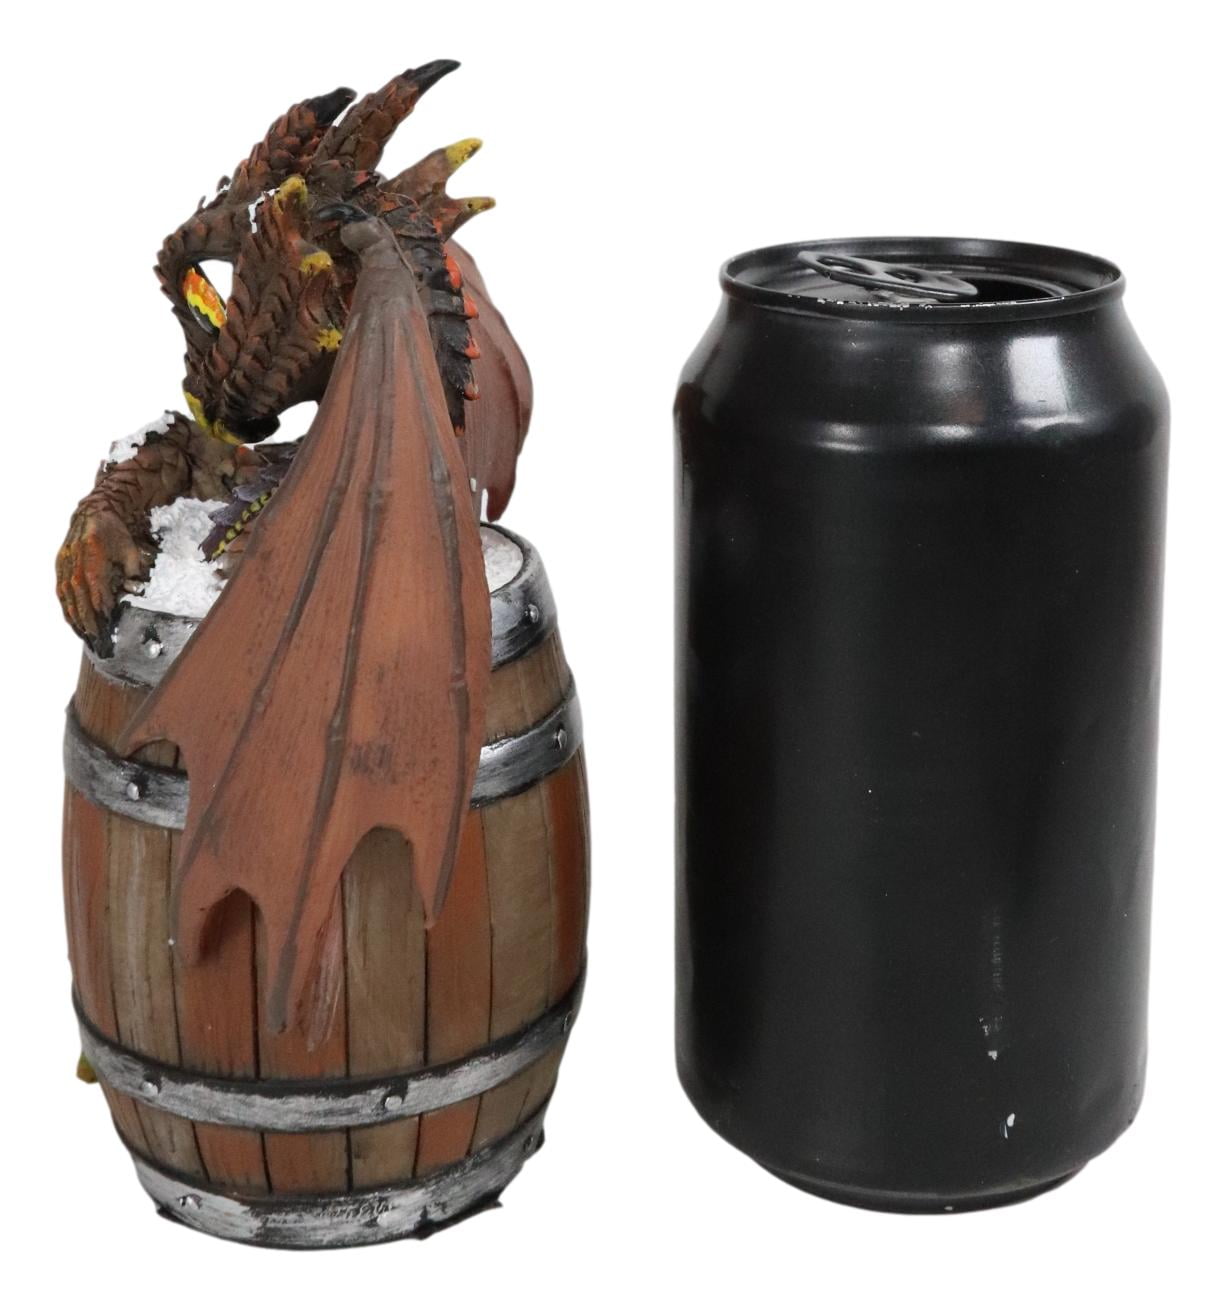 Zevran drinking Rare Antivan Brandy - Dragon Age: Origins - Feastday gifts/pranks